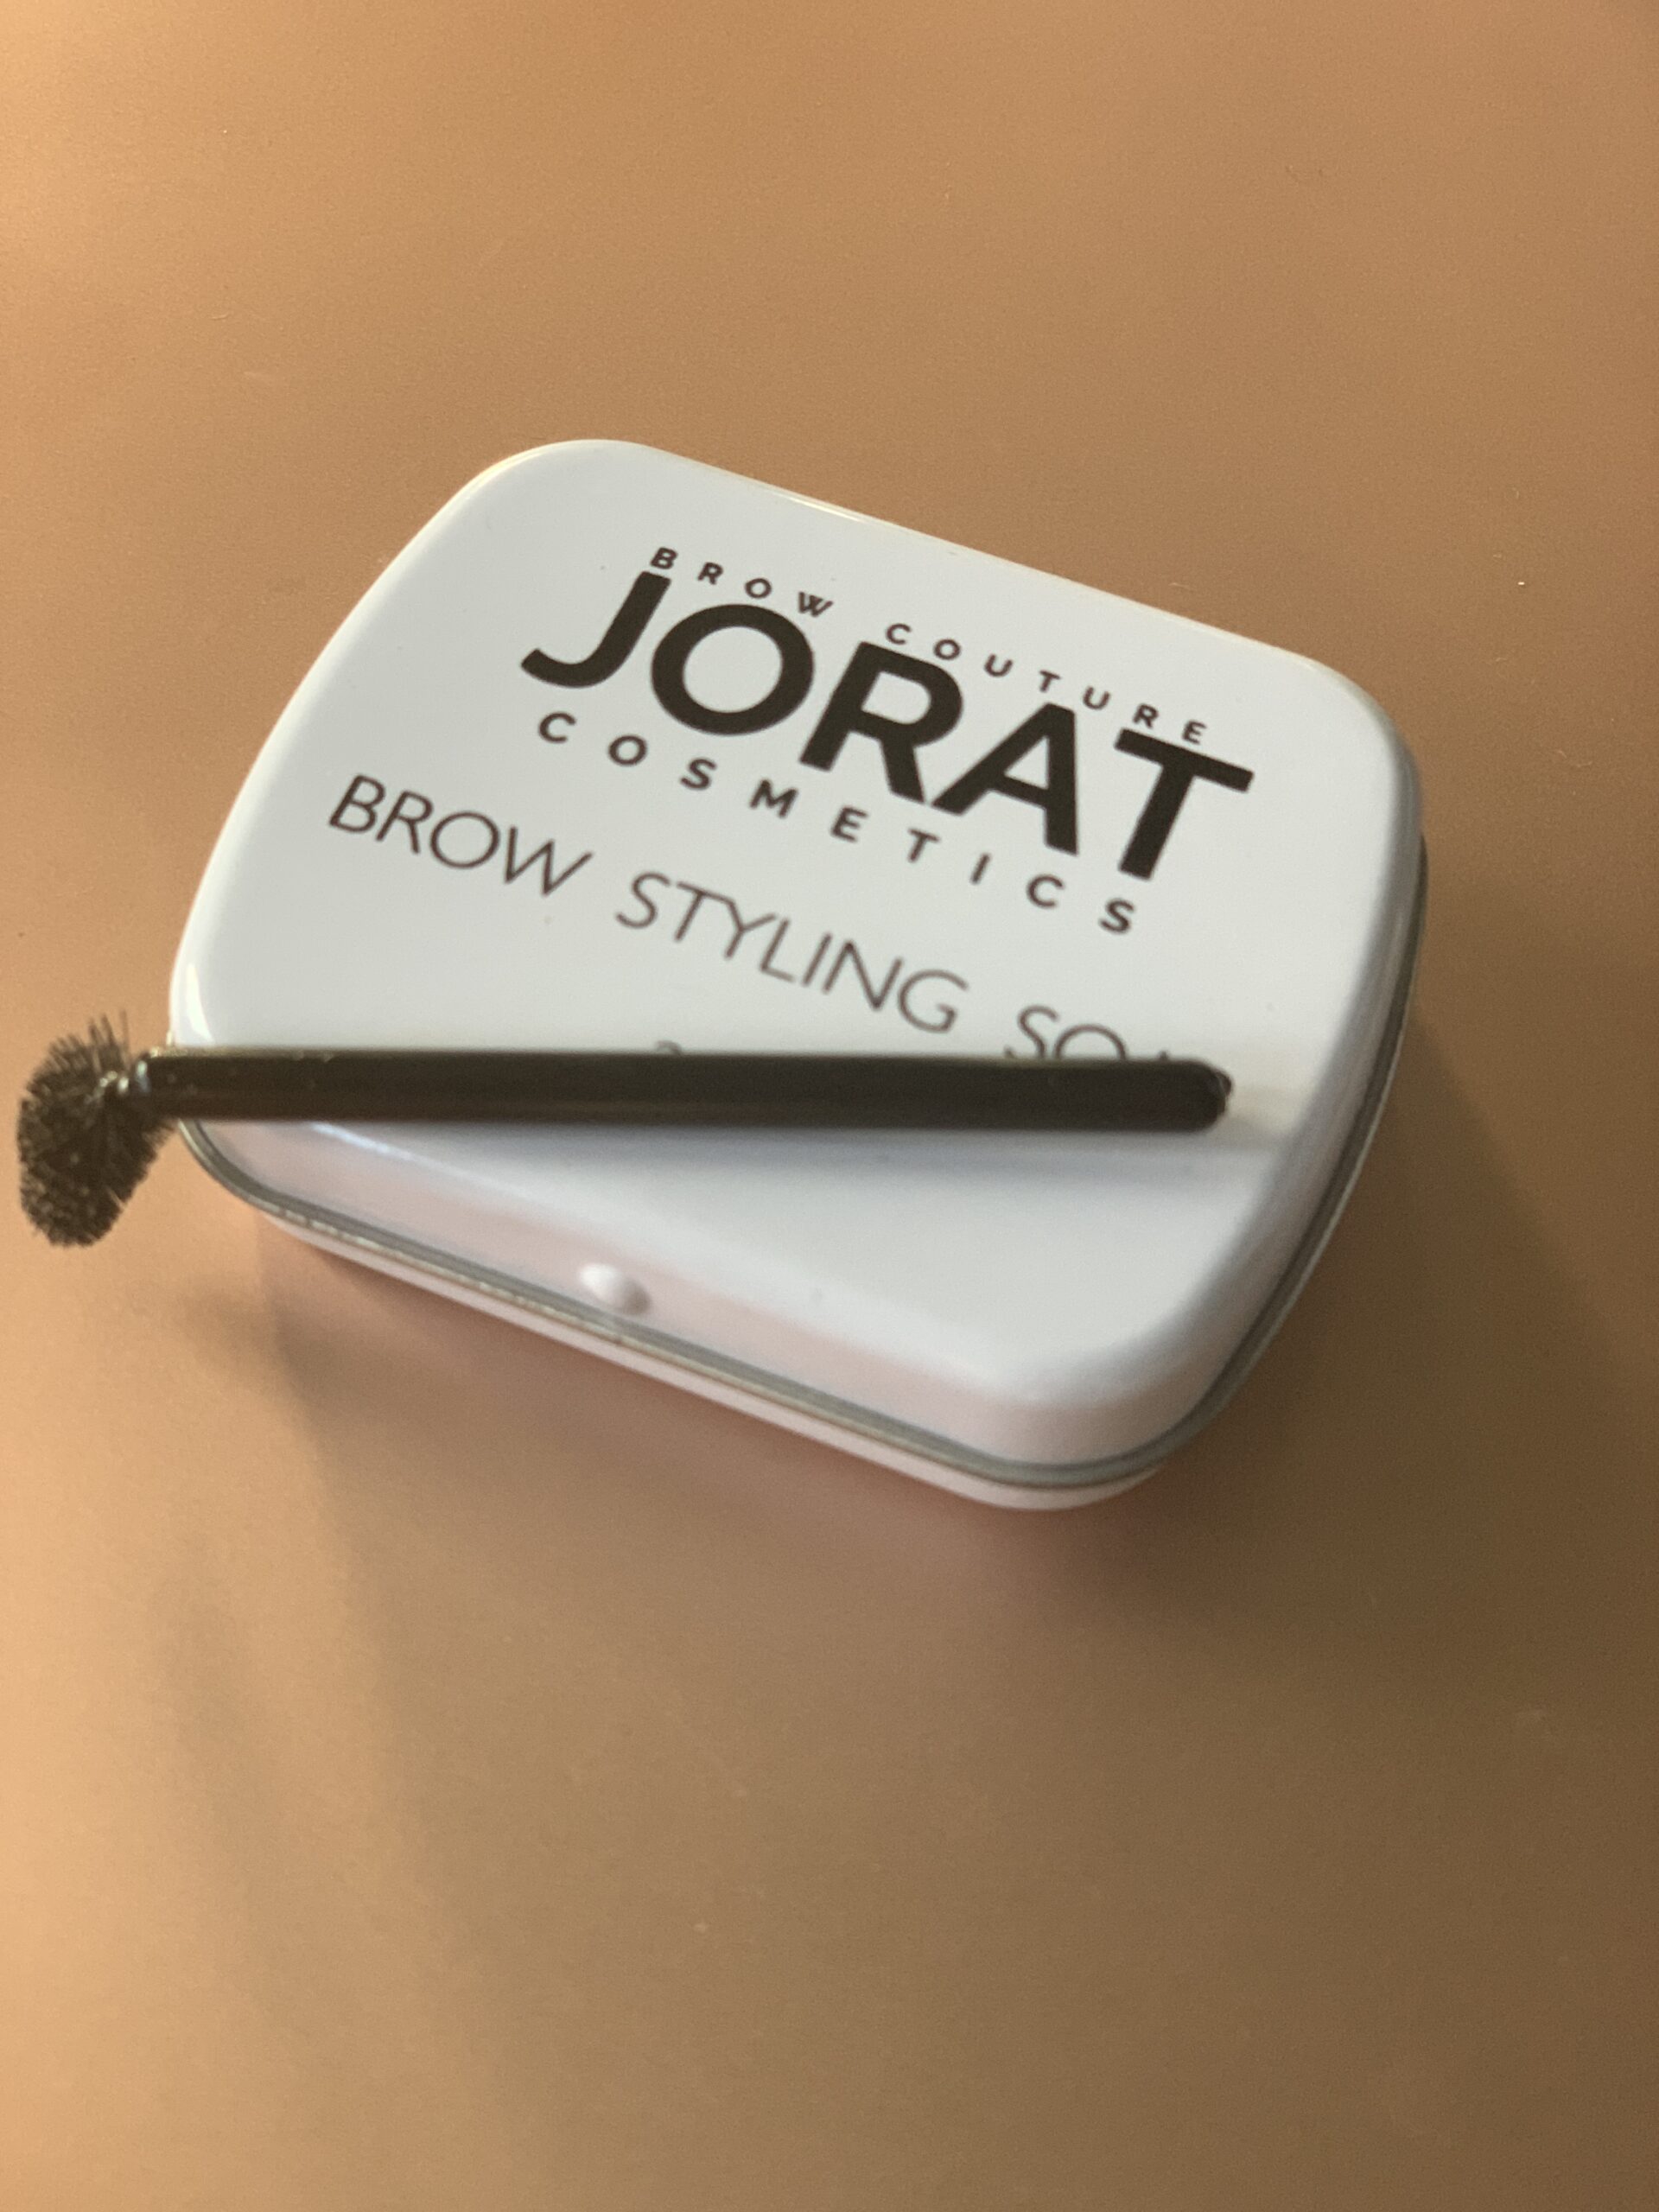 Jorat Brow Styling soap